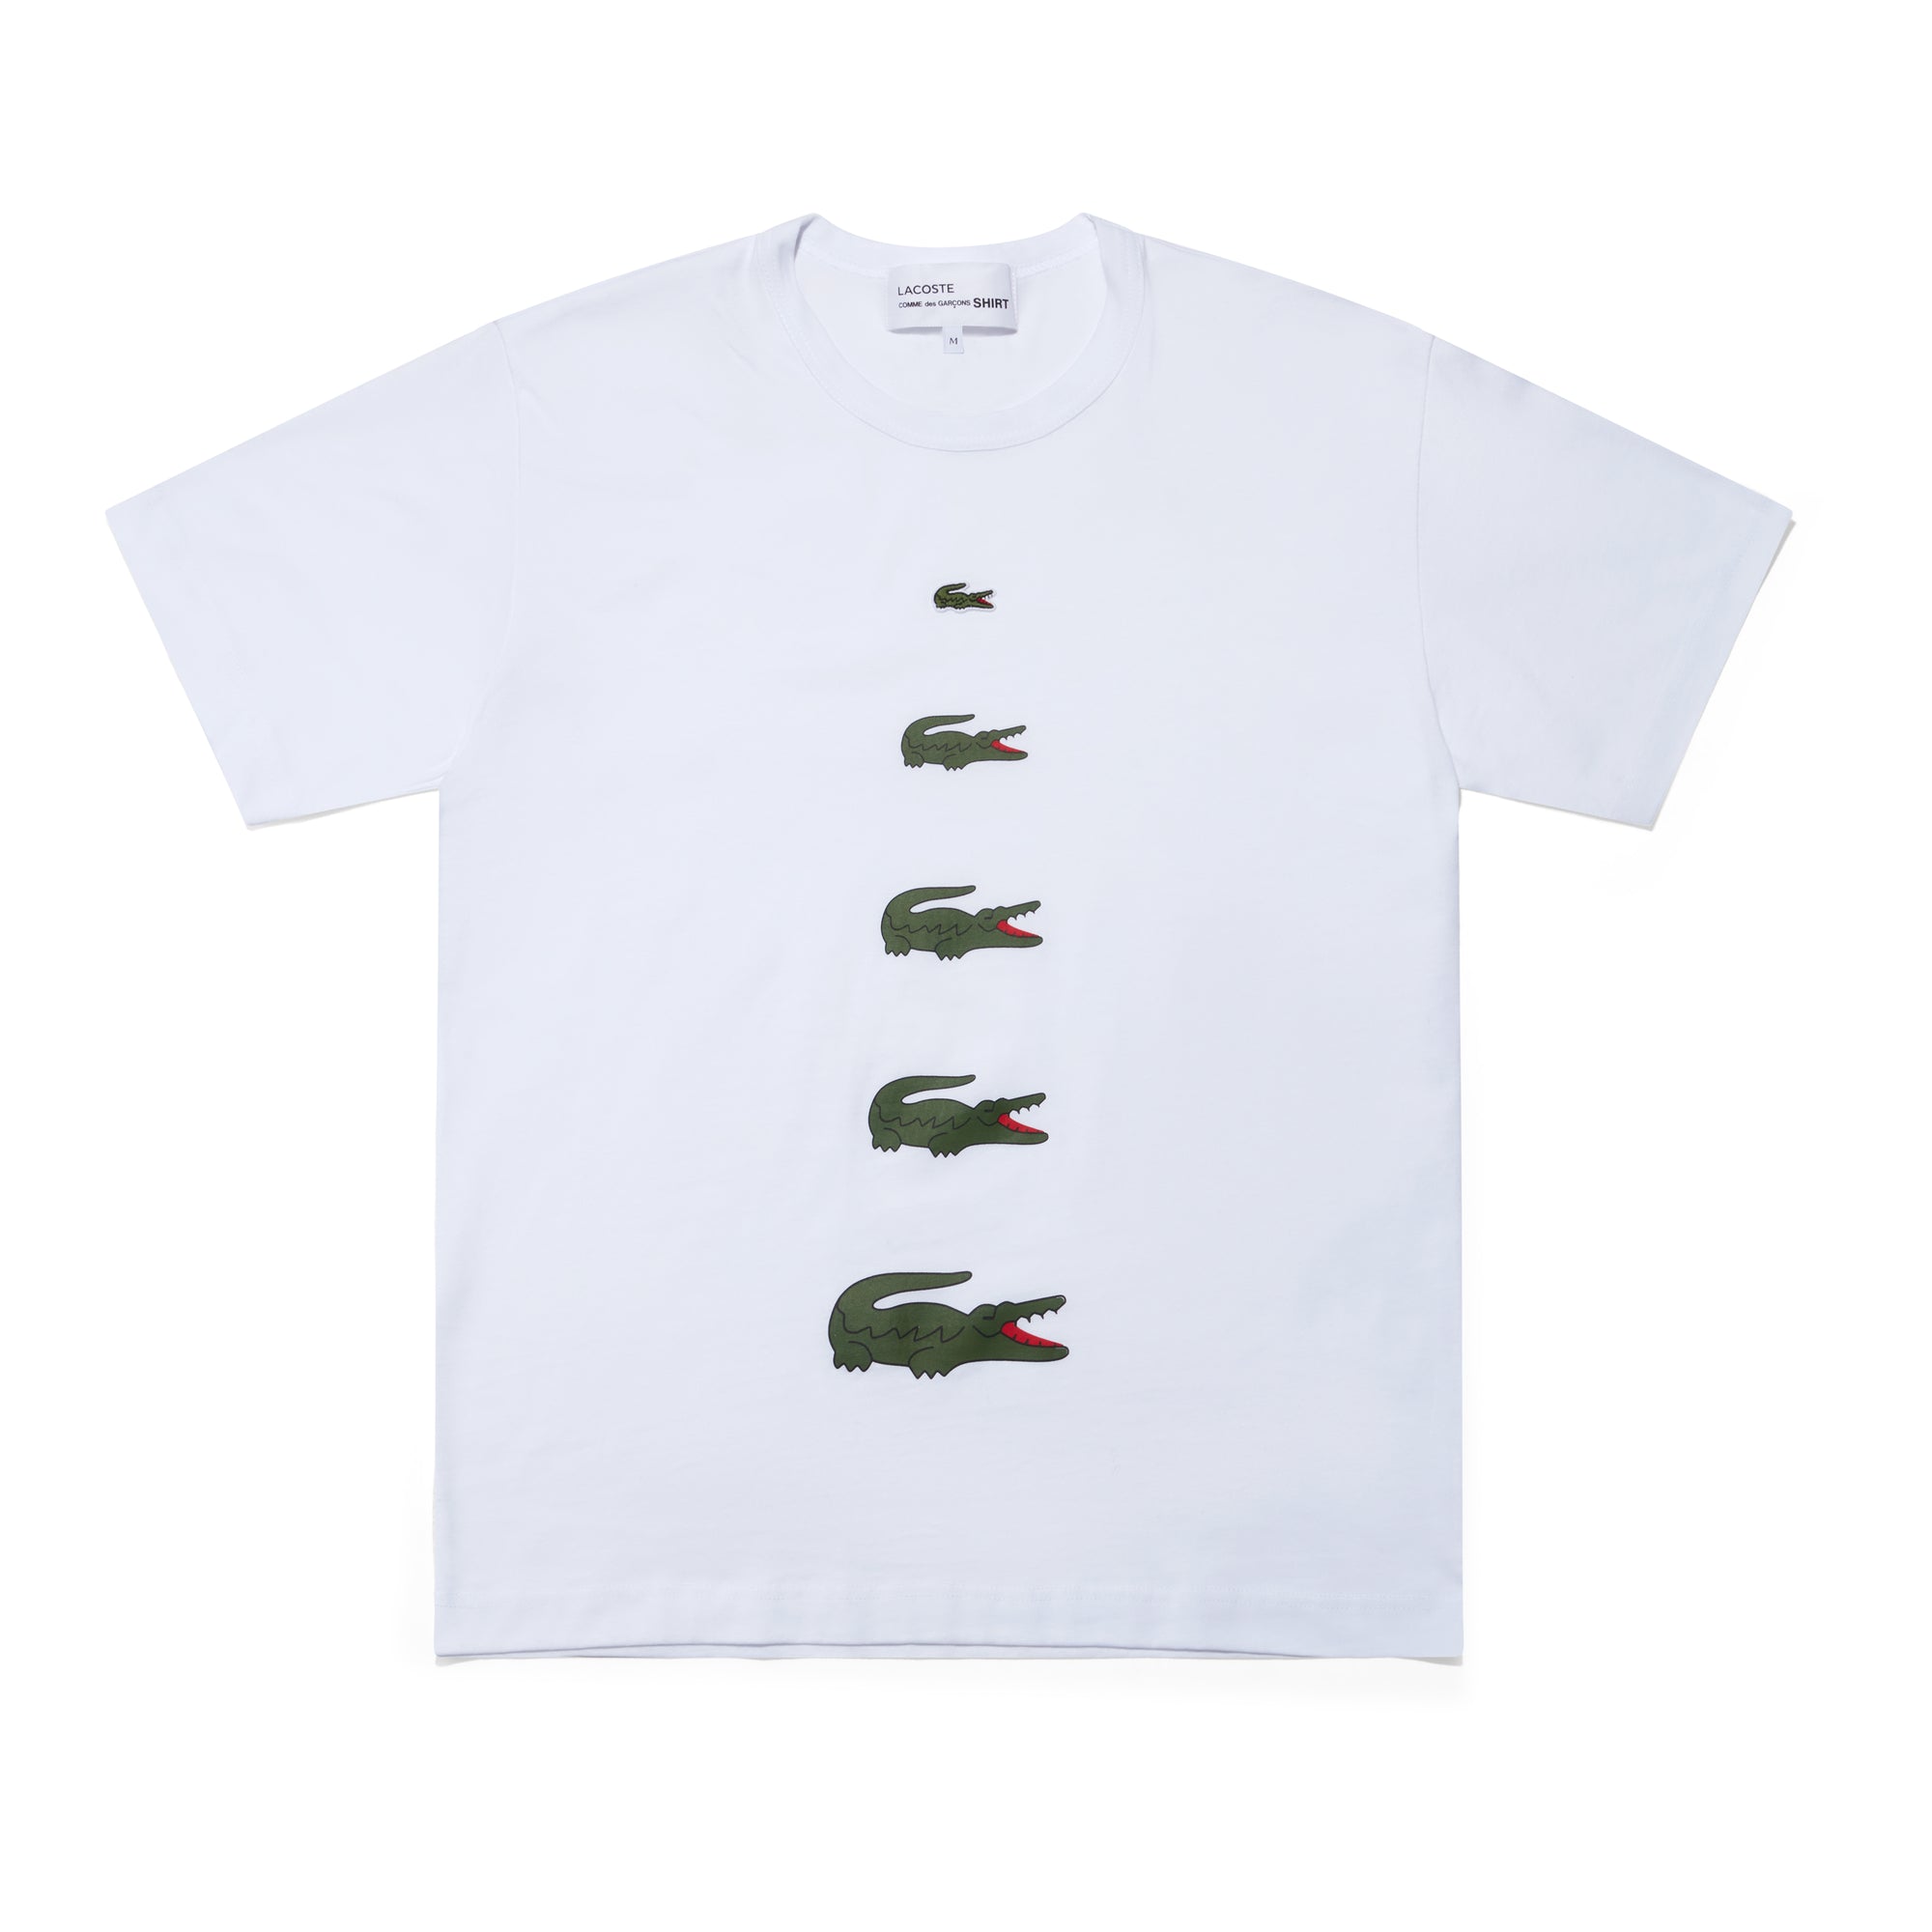 CDG Shirt - Lacoste Men’s Printed T-Shirt - (White) view 5